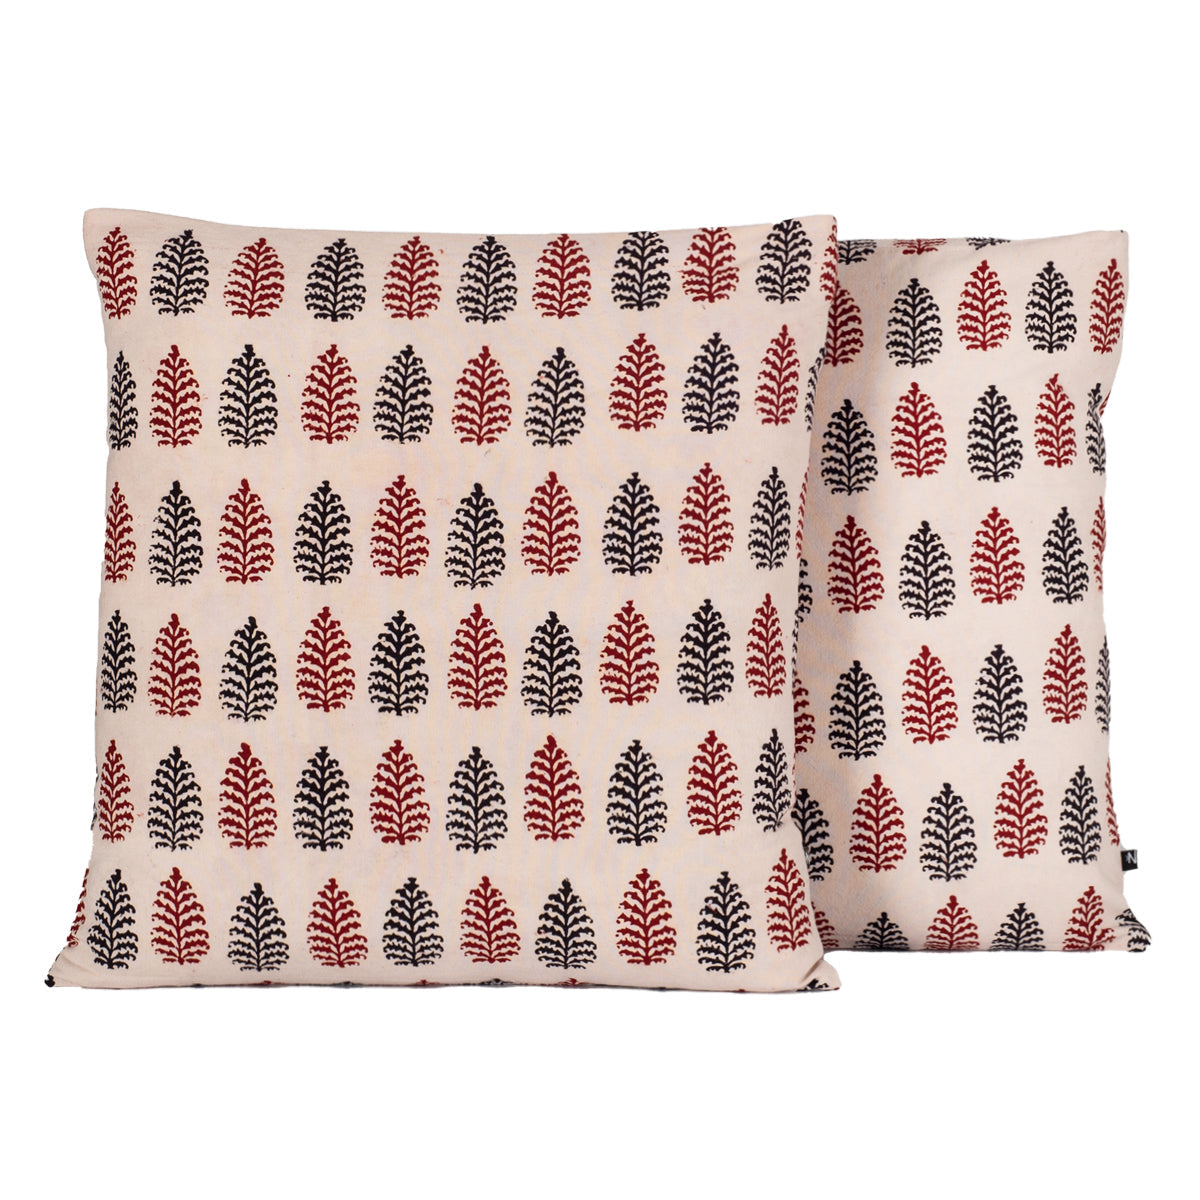 Pine Motif Bagh Hand Block Print Cotton Cushion Cover - Red Black-2